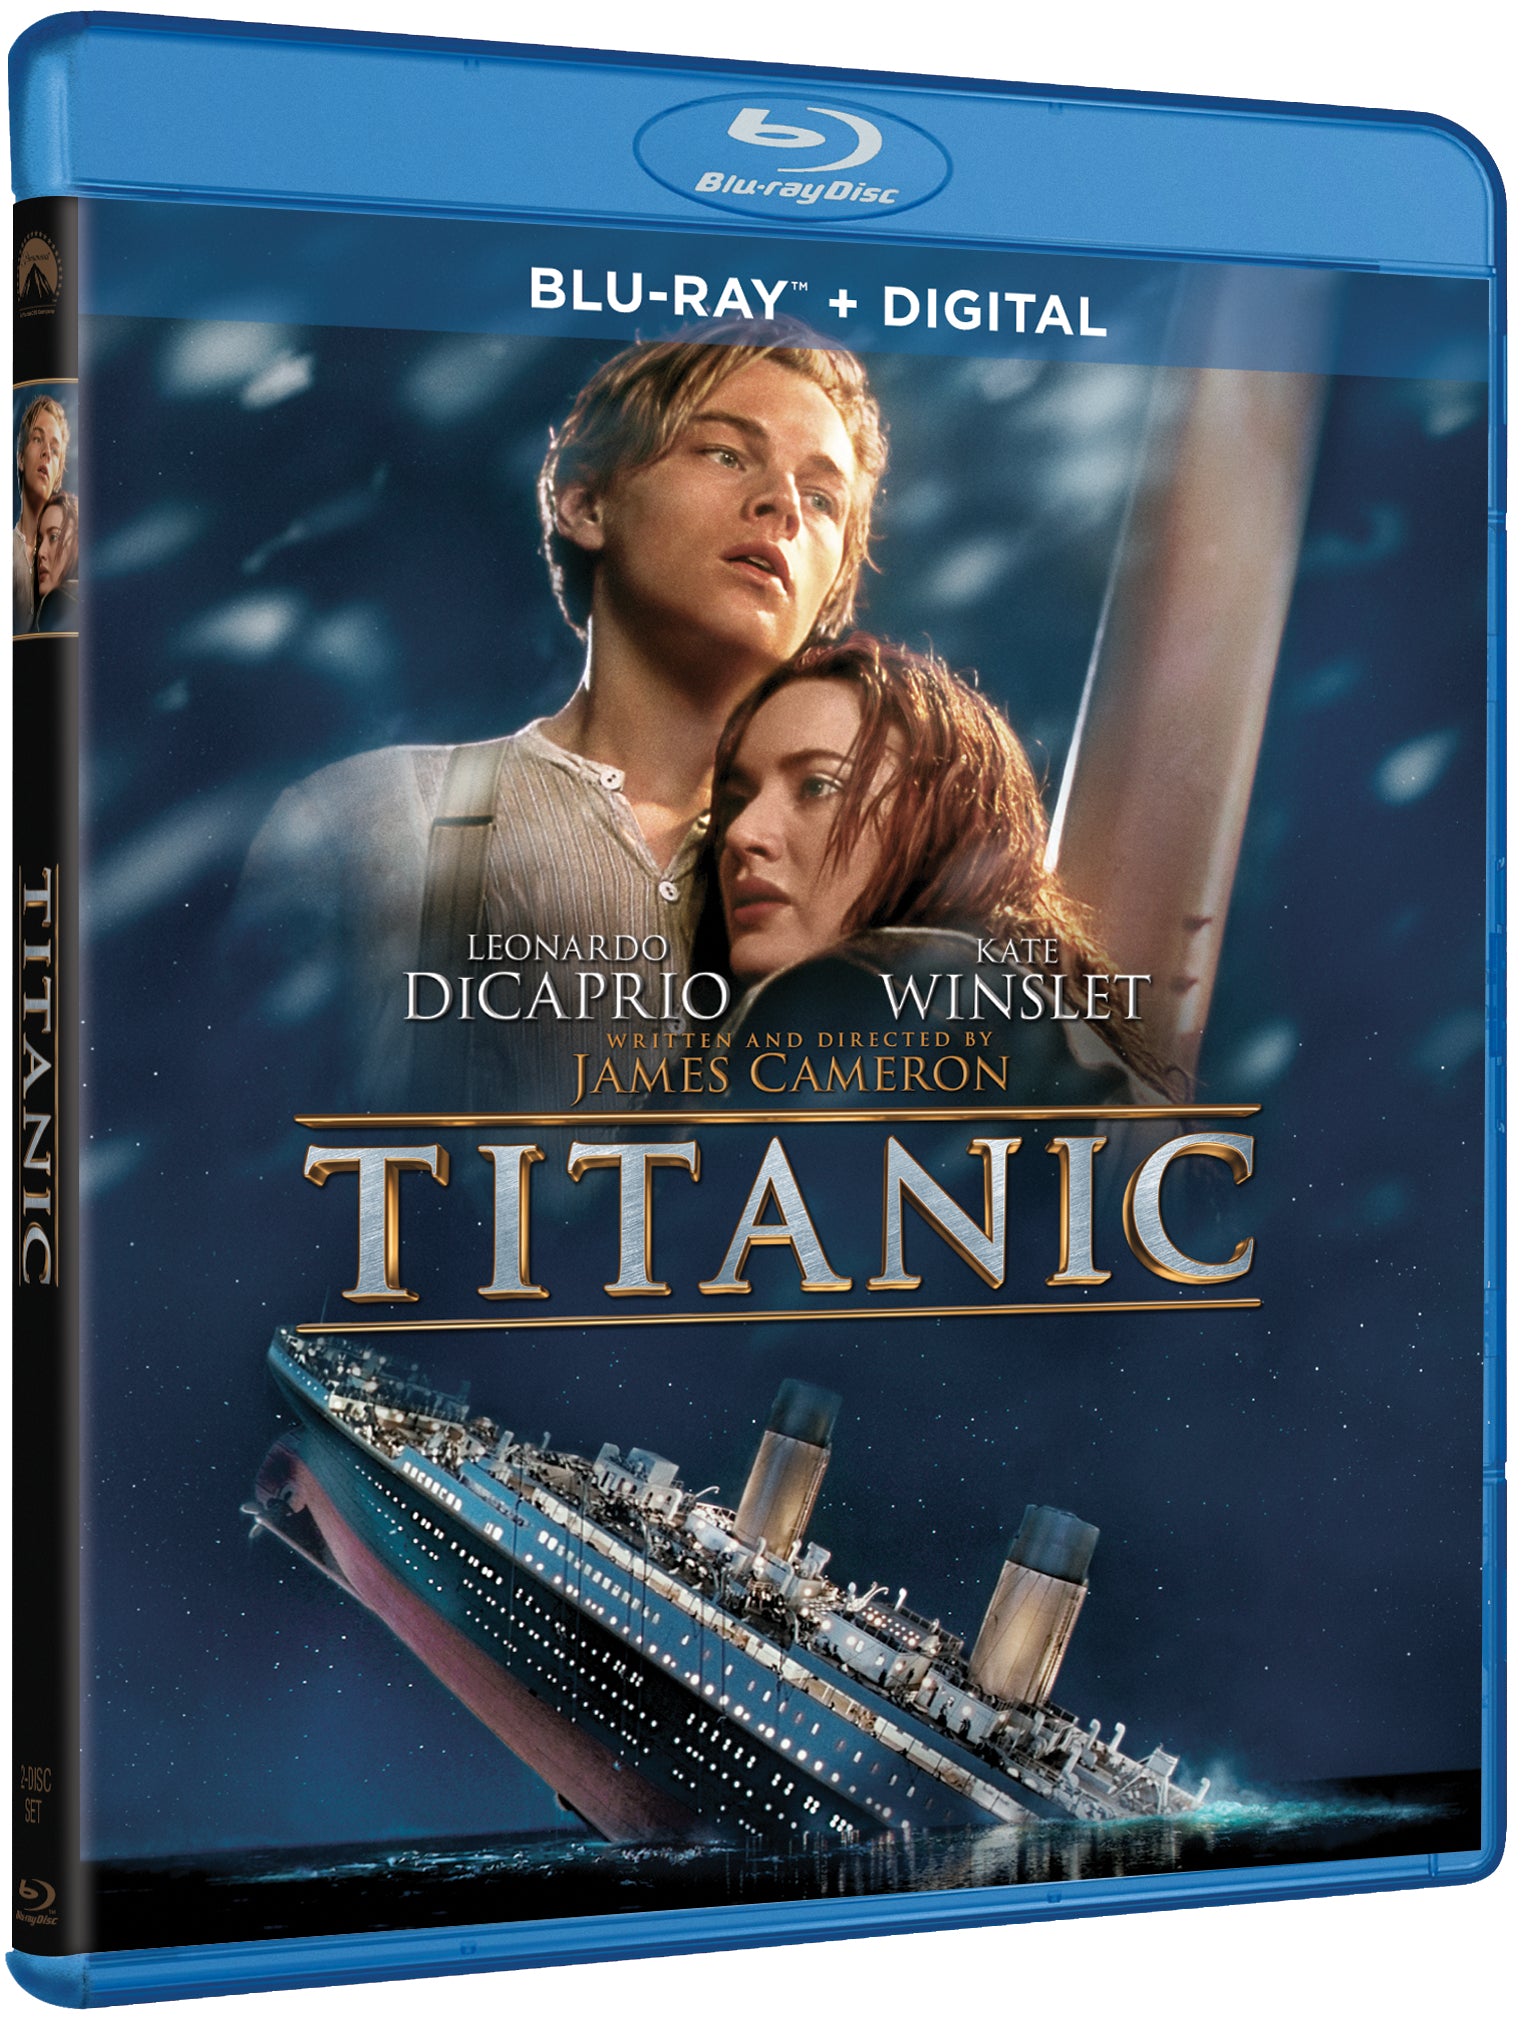 Titanic [Includes Digital Copy] [Blu-ray] cover art